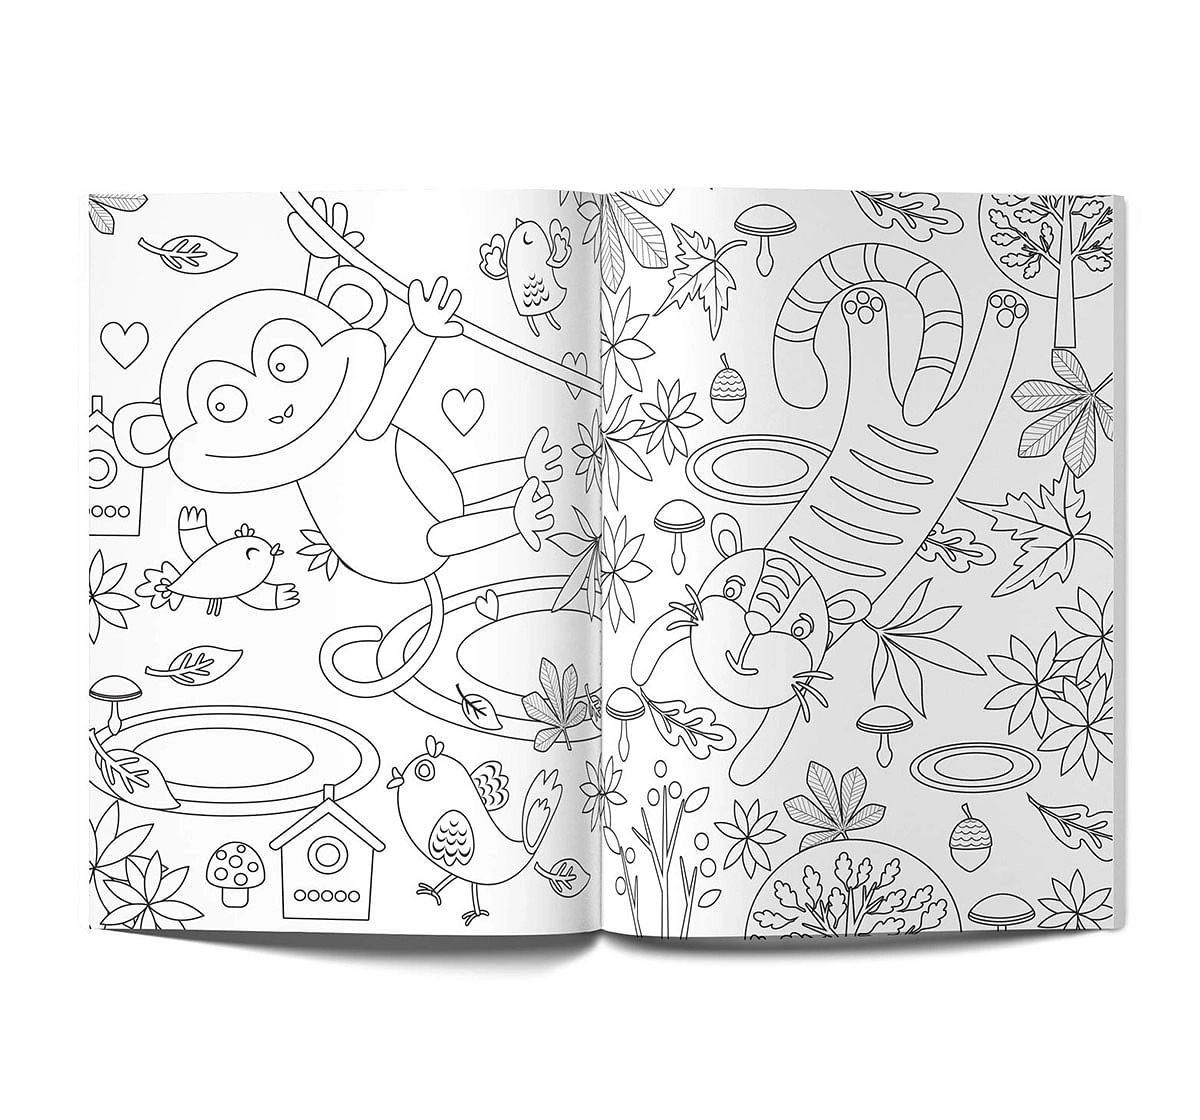 Wonder House Books Doodle coloring for boys doodle coloring Paperback Multicolor 3Y+